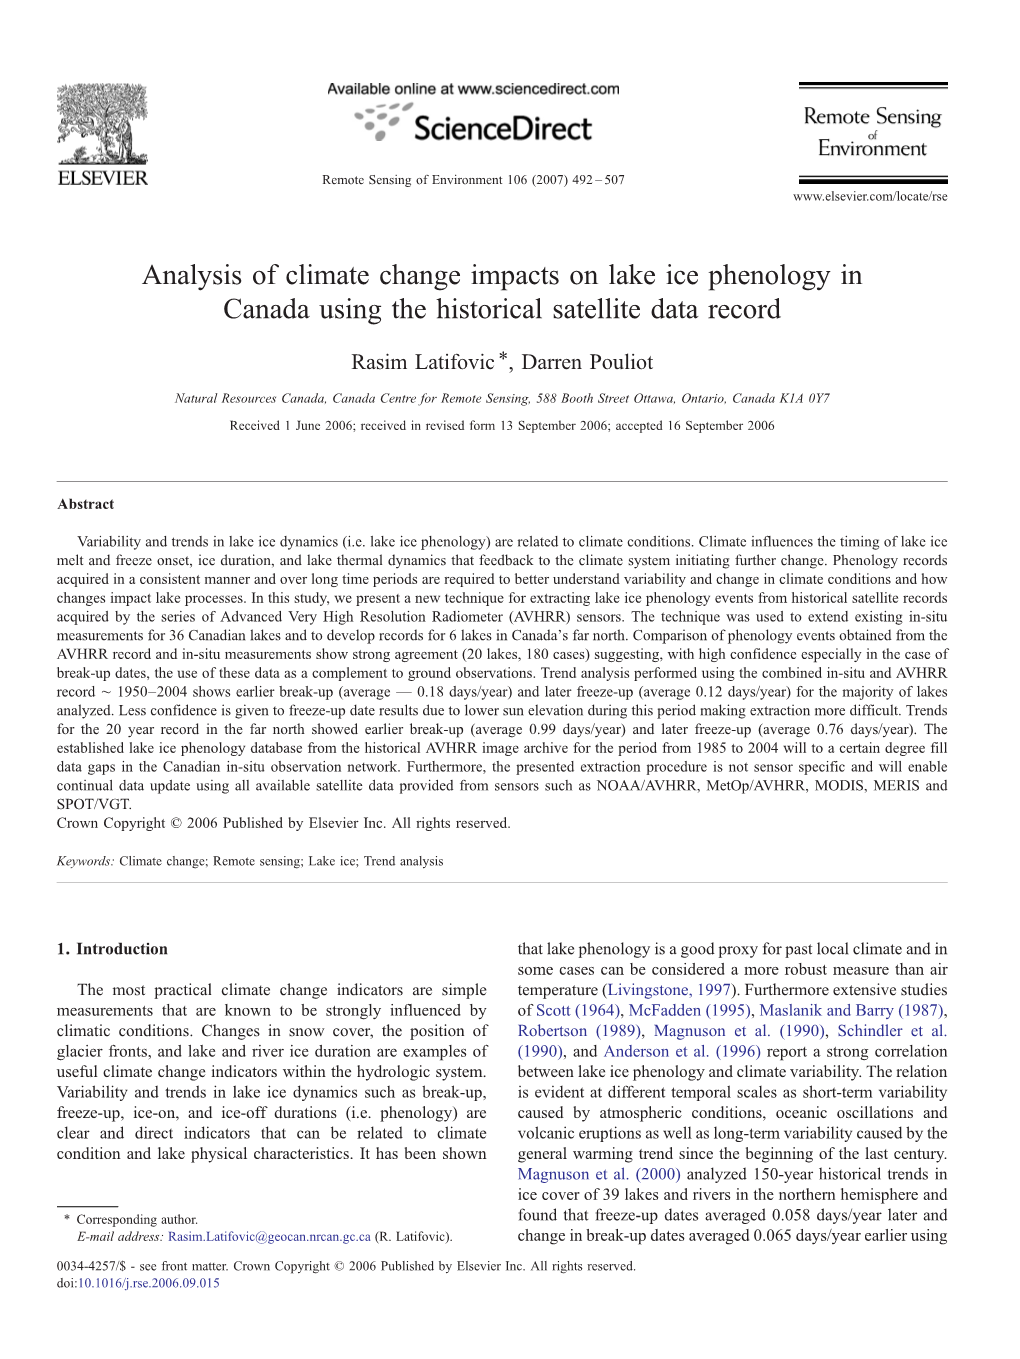 Analysis of Climate Change Impacts on Lake Ice Phenology in Canada Using the Historical Satellite Data Record ⁎ Rasim Latifovic , Darren Pouliot